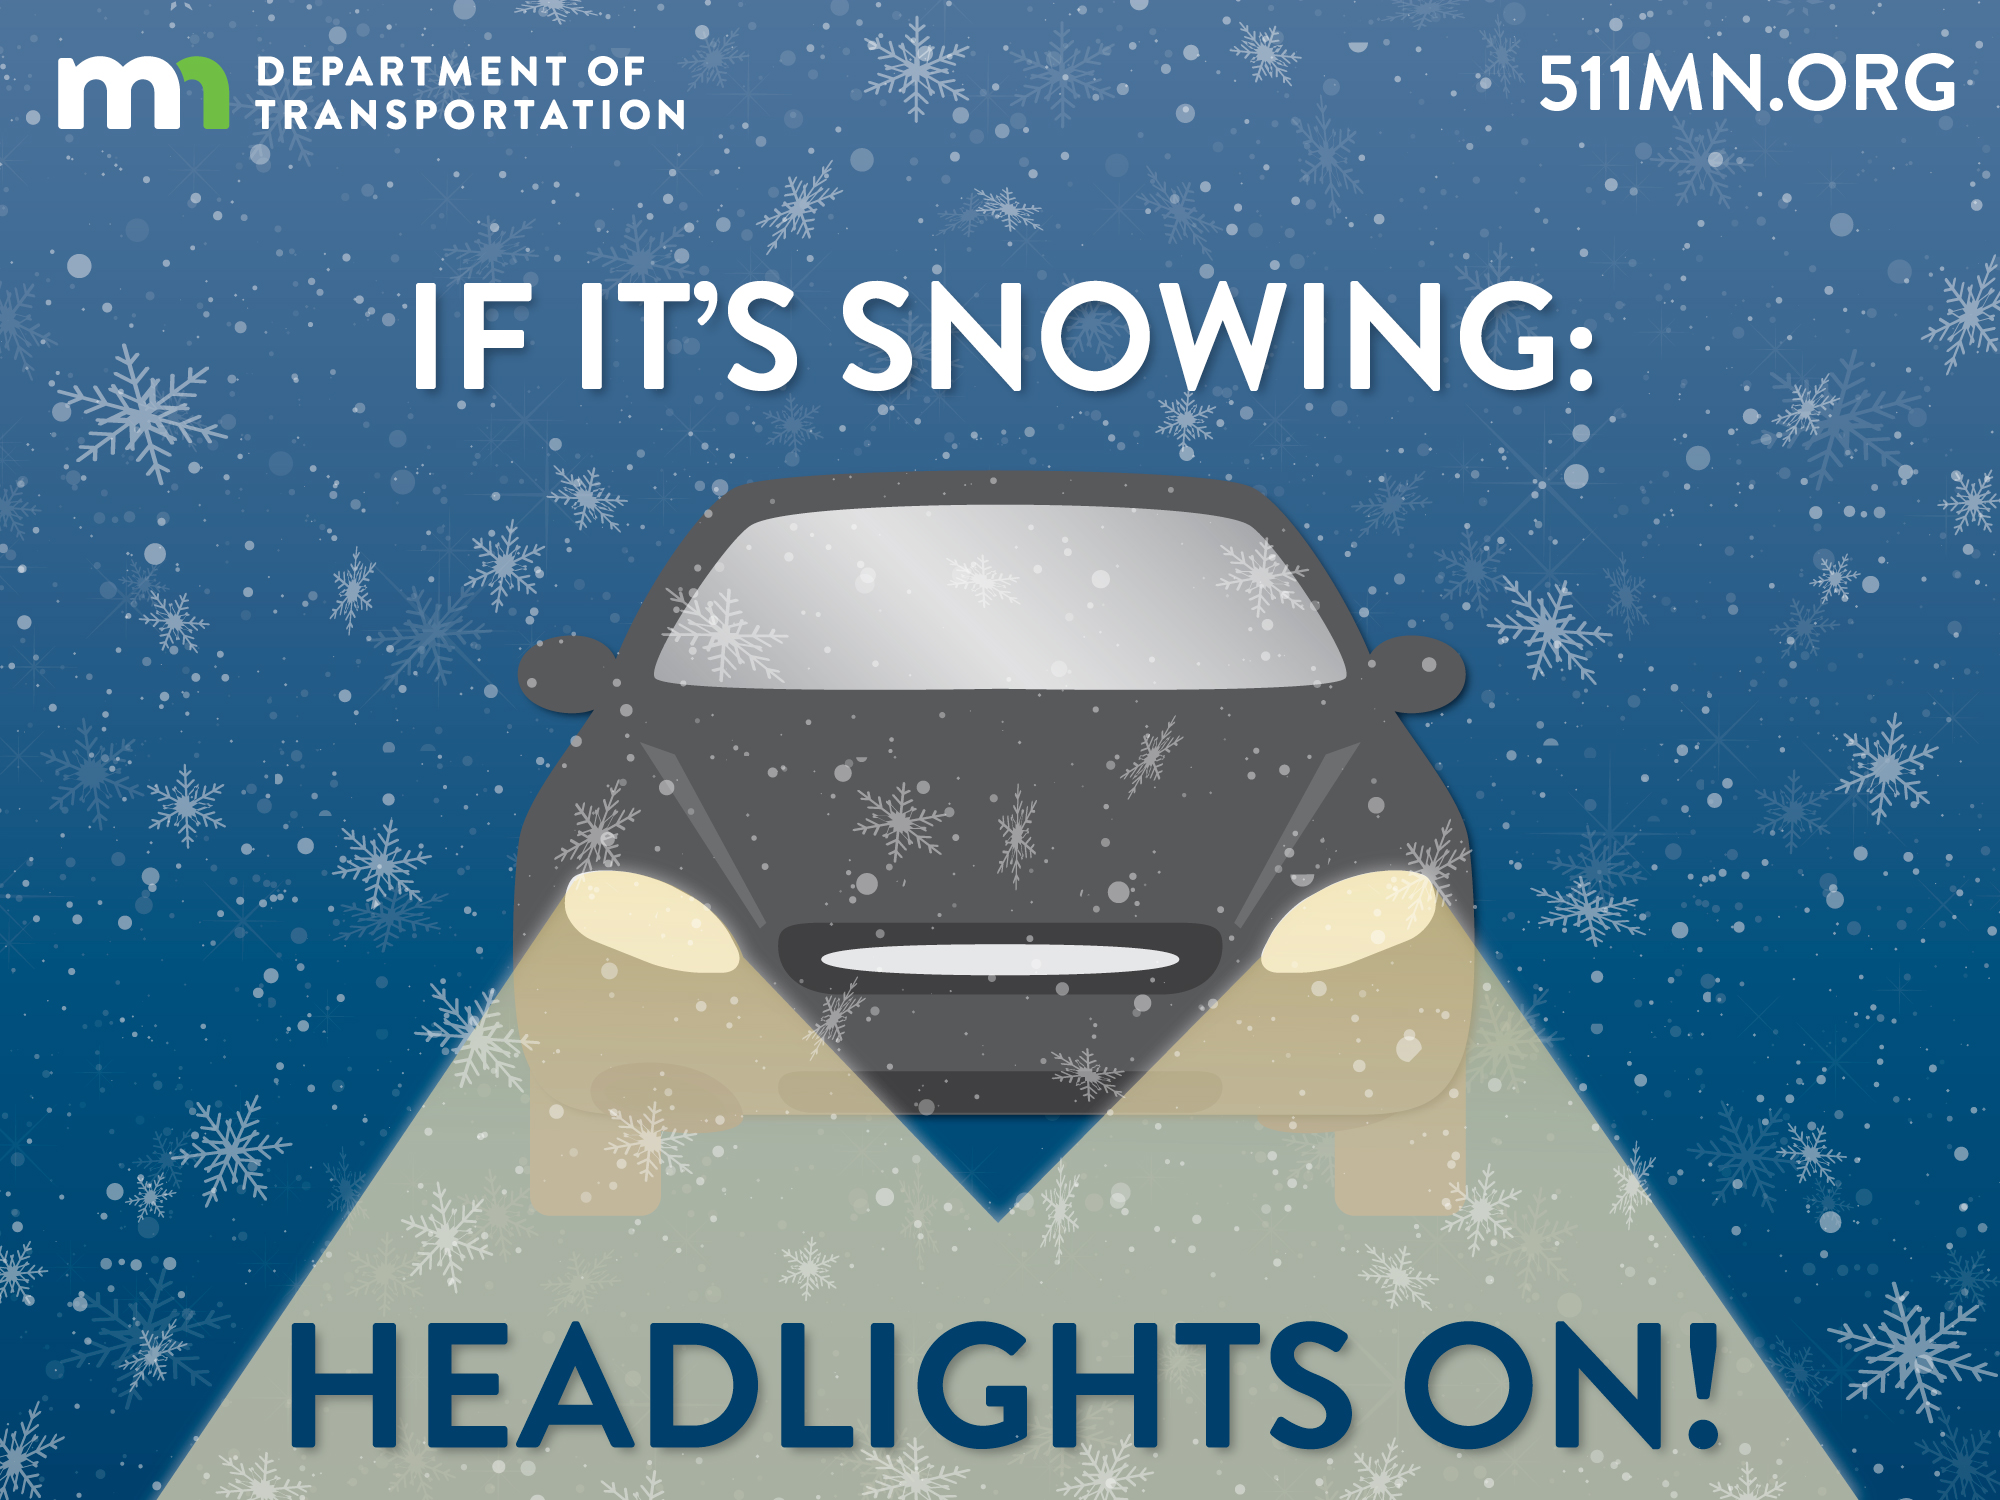 If it’s snowing: headlights on.